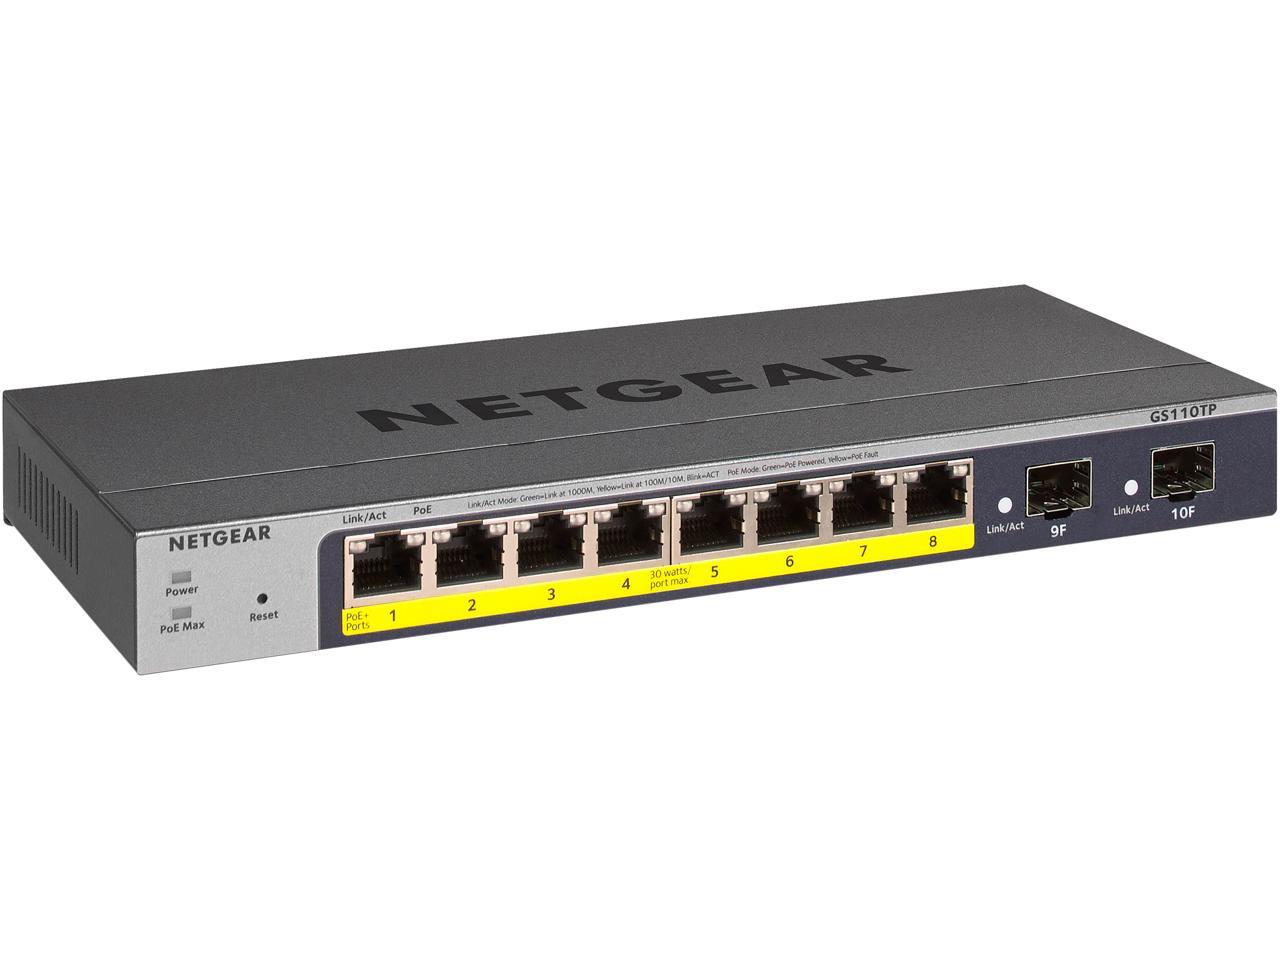 NETGEAR GS110TPv3/GS110TPP 8-Port Gigabit PoE+ Ethernet Smart Managed Pro Switch’s Installation Guide